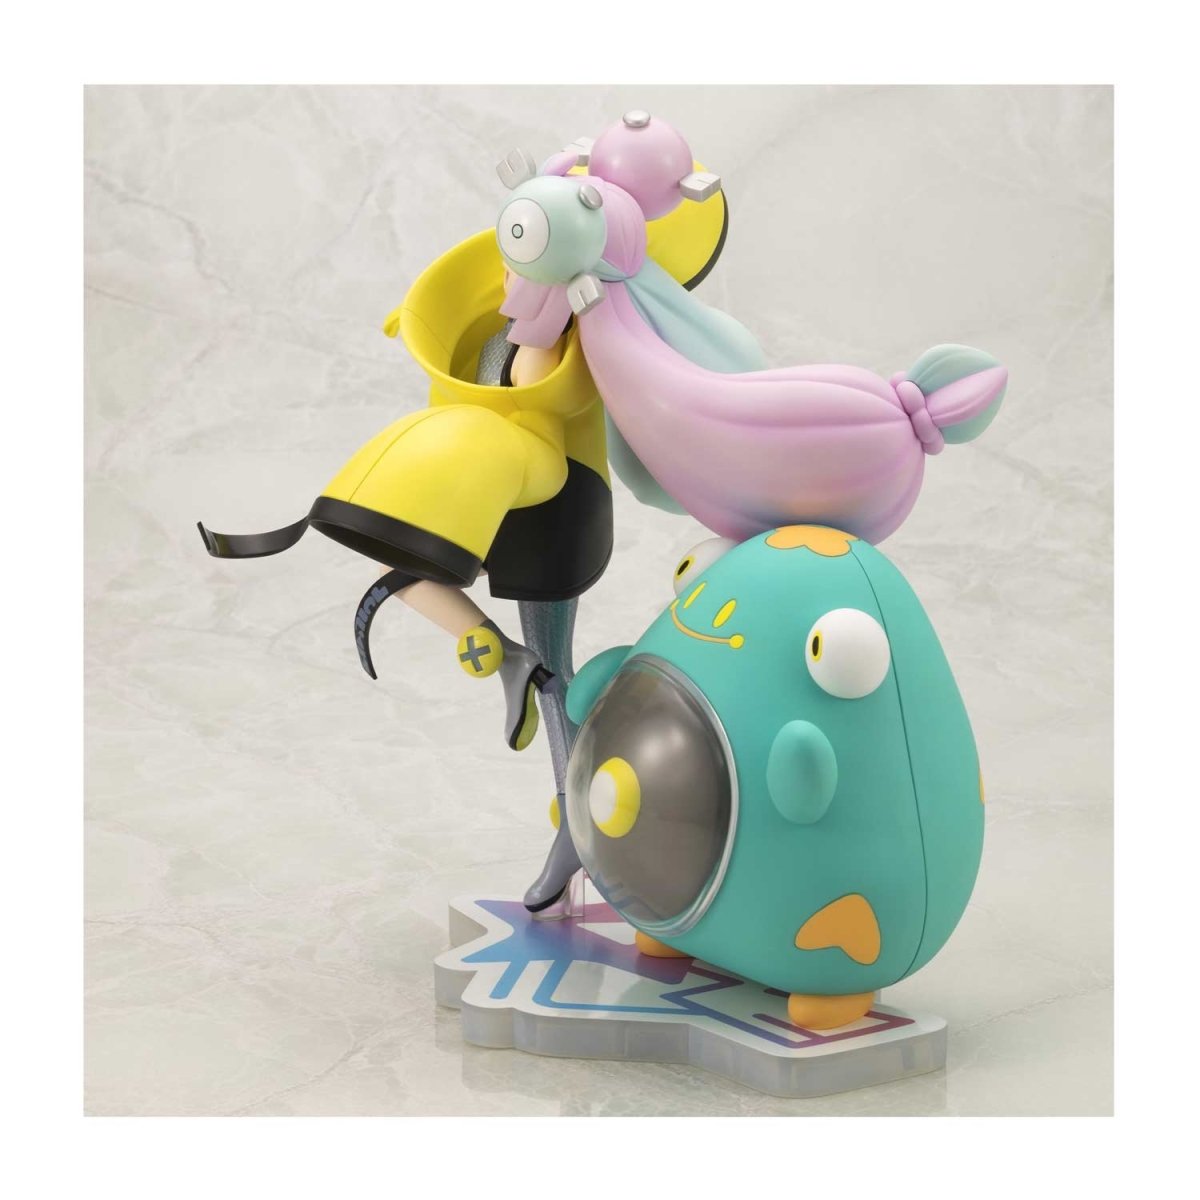 ¡Pokémon Center anuncia nueva figura de e-Nigma y Belibolt! 10